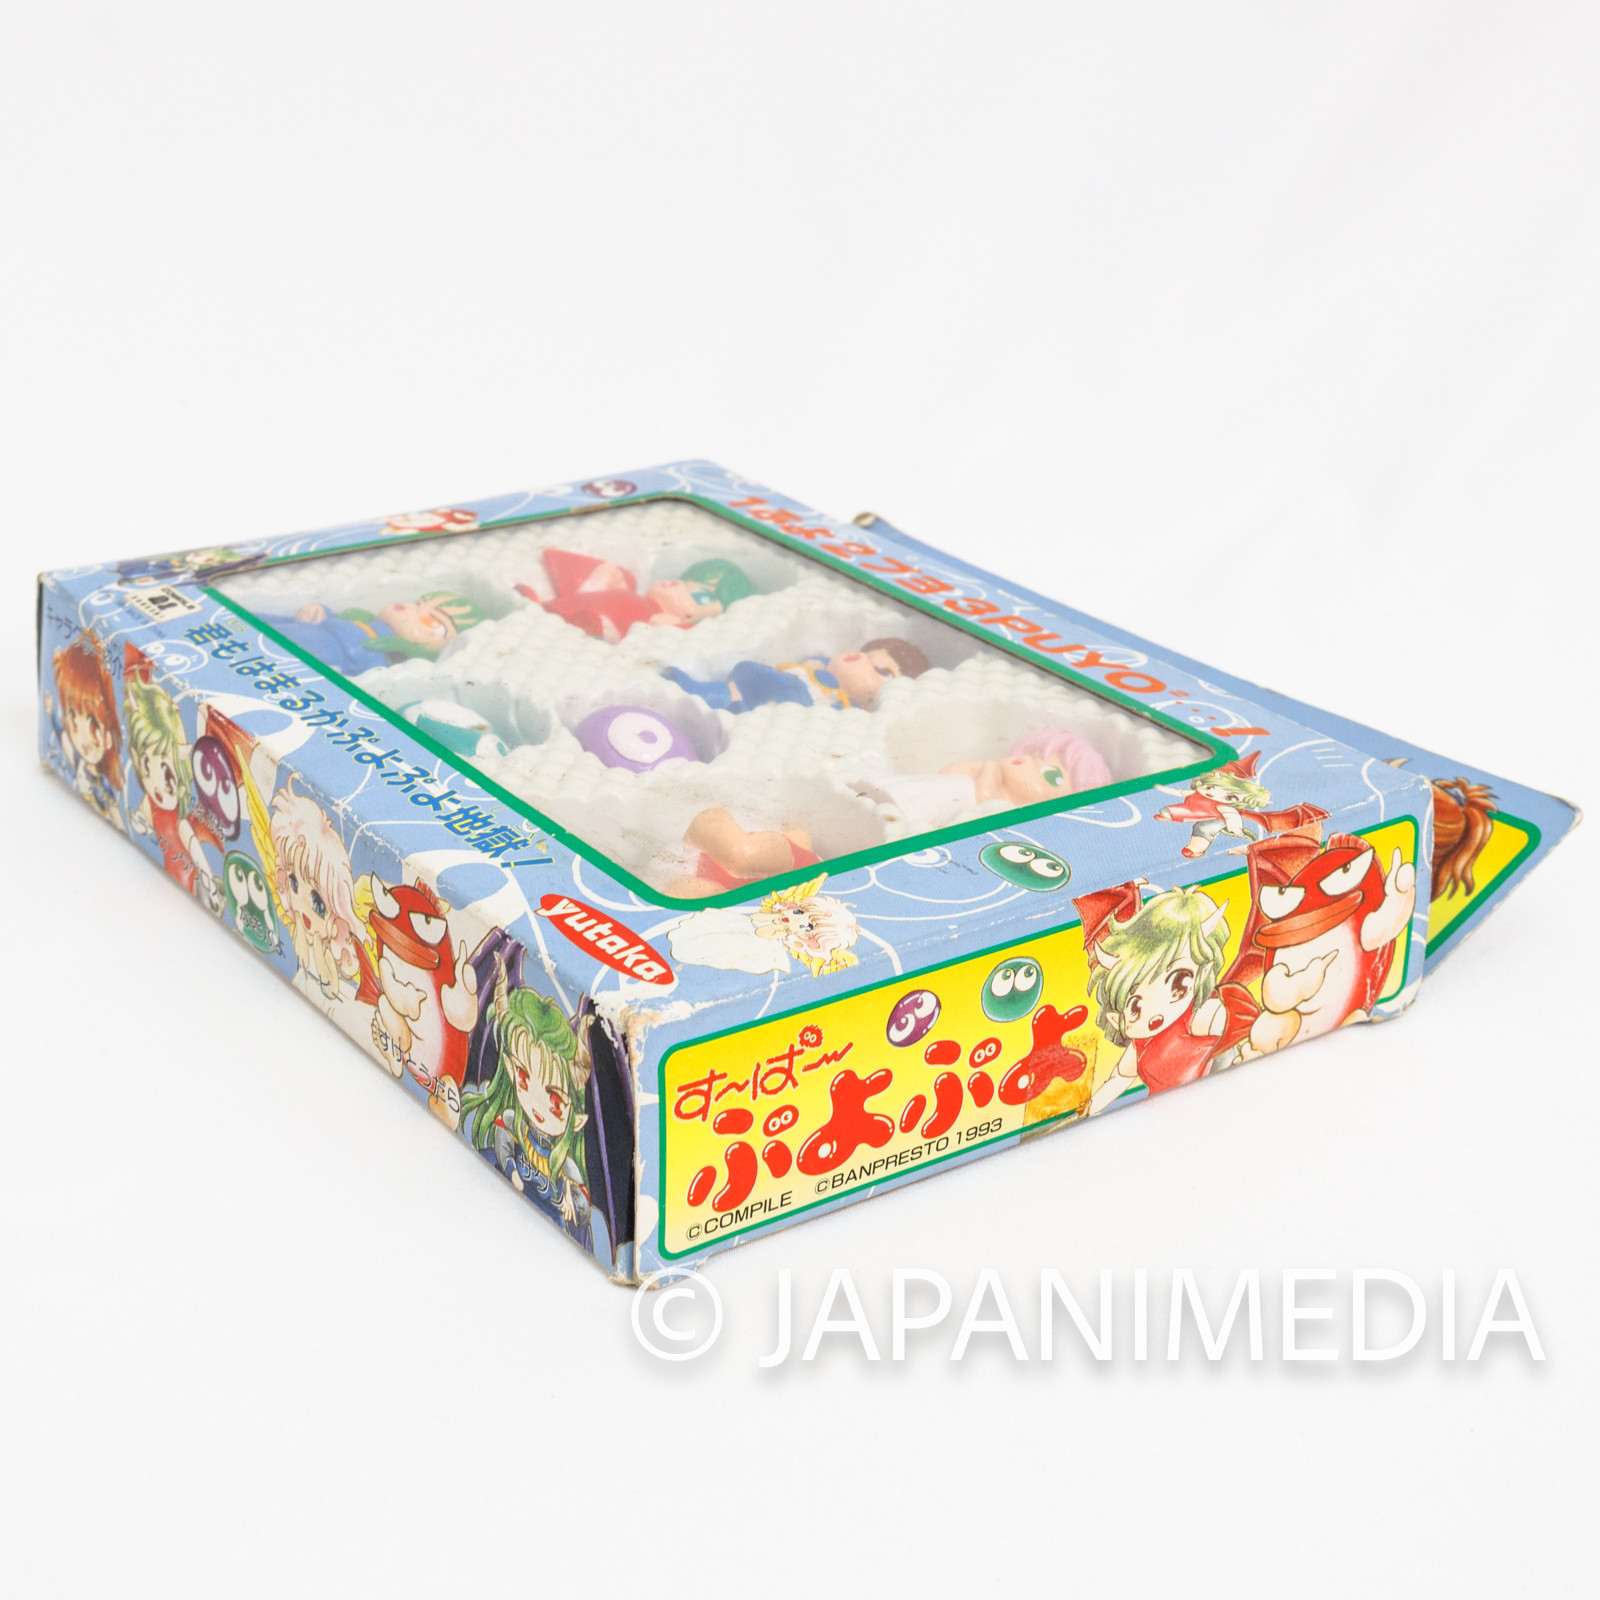 Retro RARE Puyo Puyo Pocket Hero Mini Figure Set Yutaka 1994 JAPAN GAME COMPILE